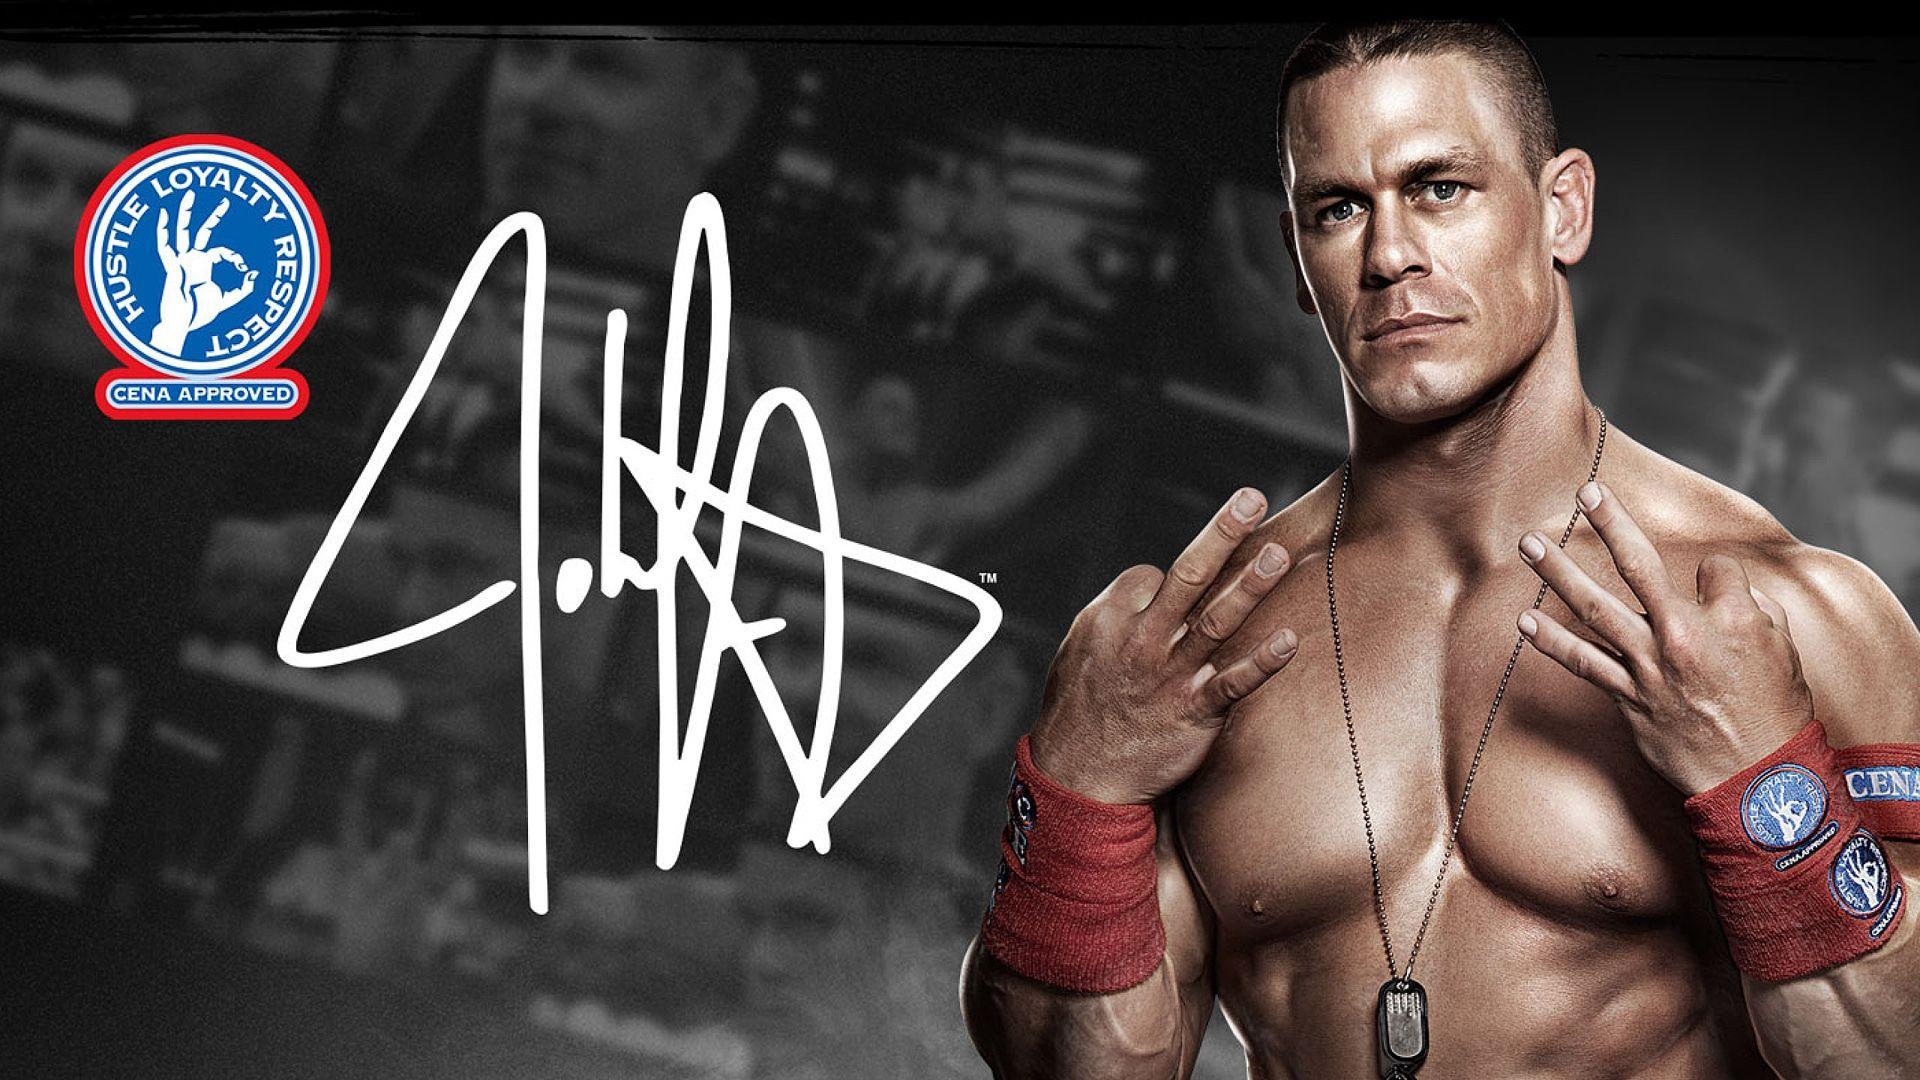 Wwe John Cena Photo Free Download HD Wallpaper